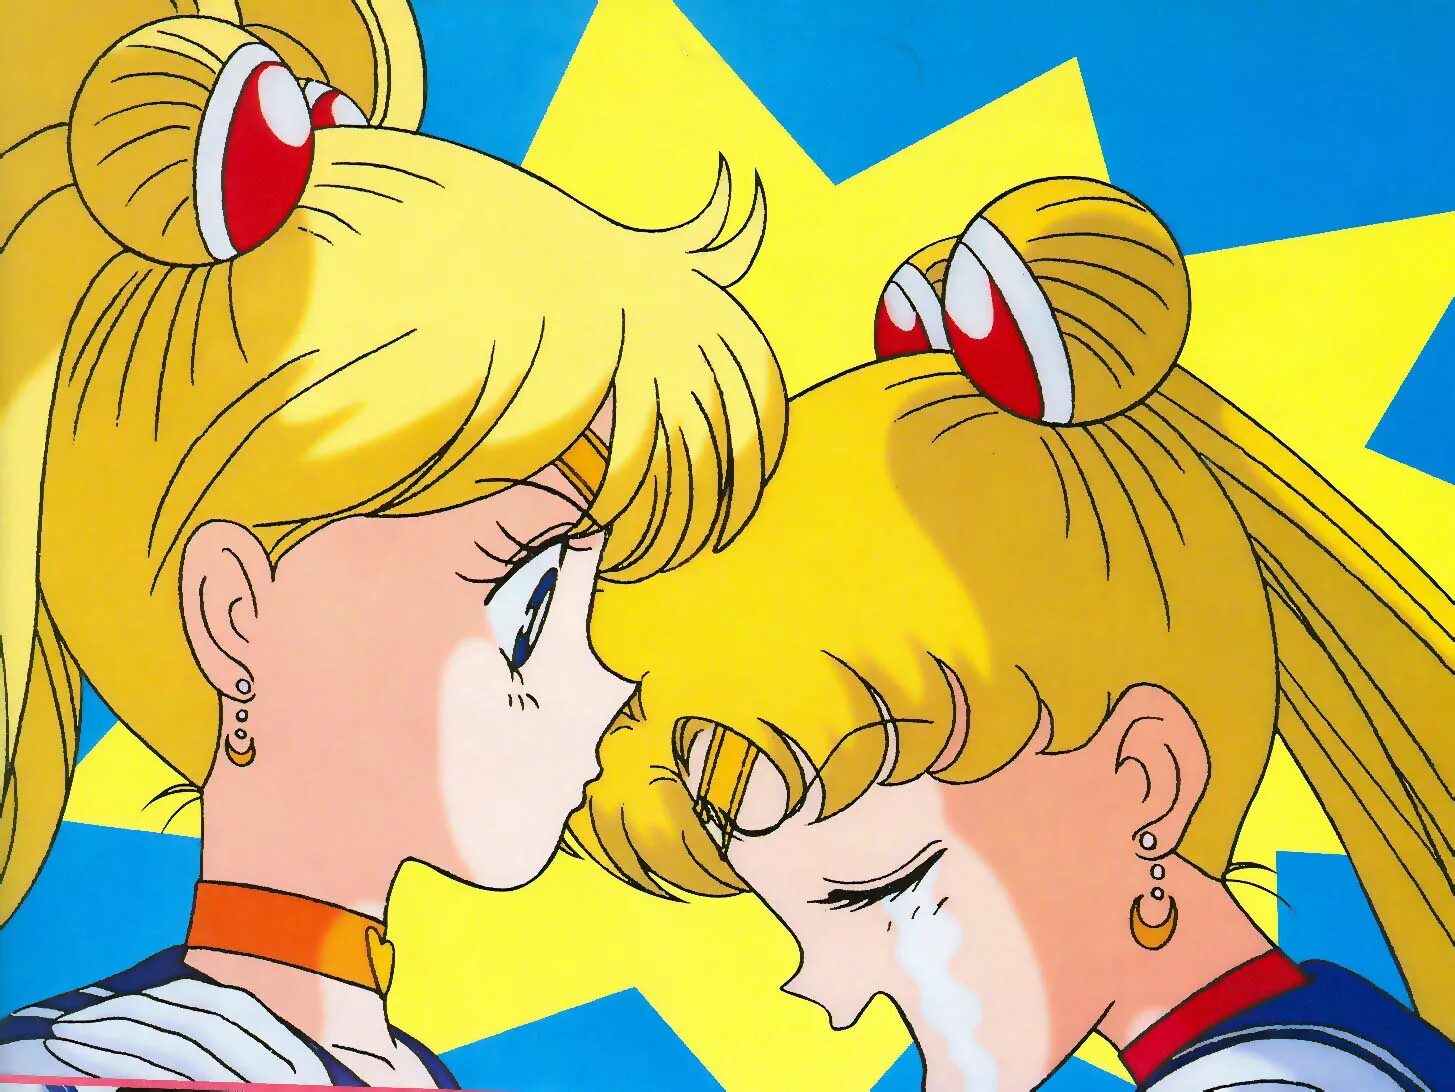 Minako bike. Sailor Moon Минако. Сейлор Мун Минако и Усаги. Усаги и Минако. Минако Айно.